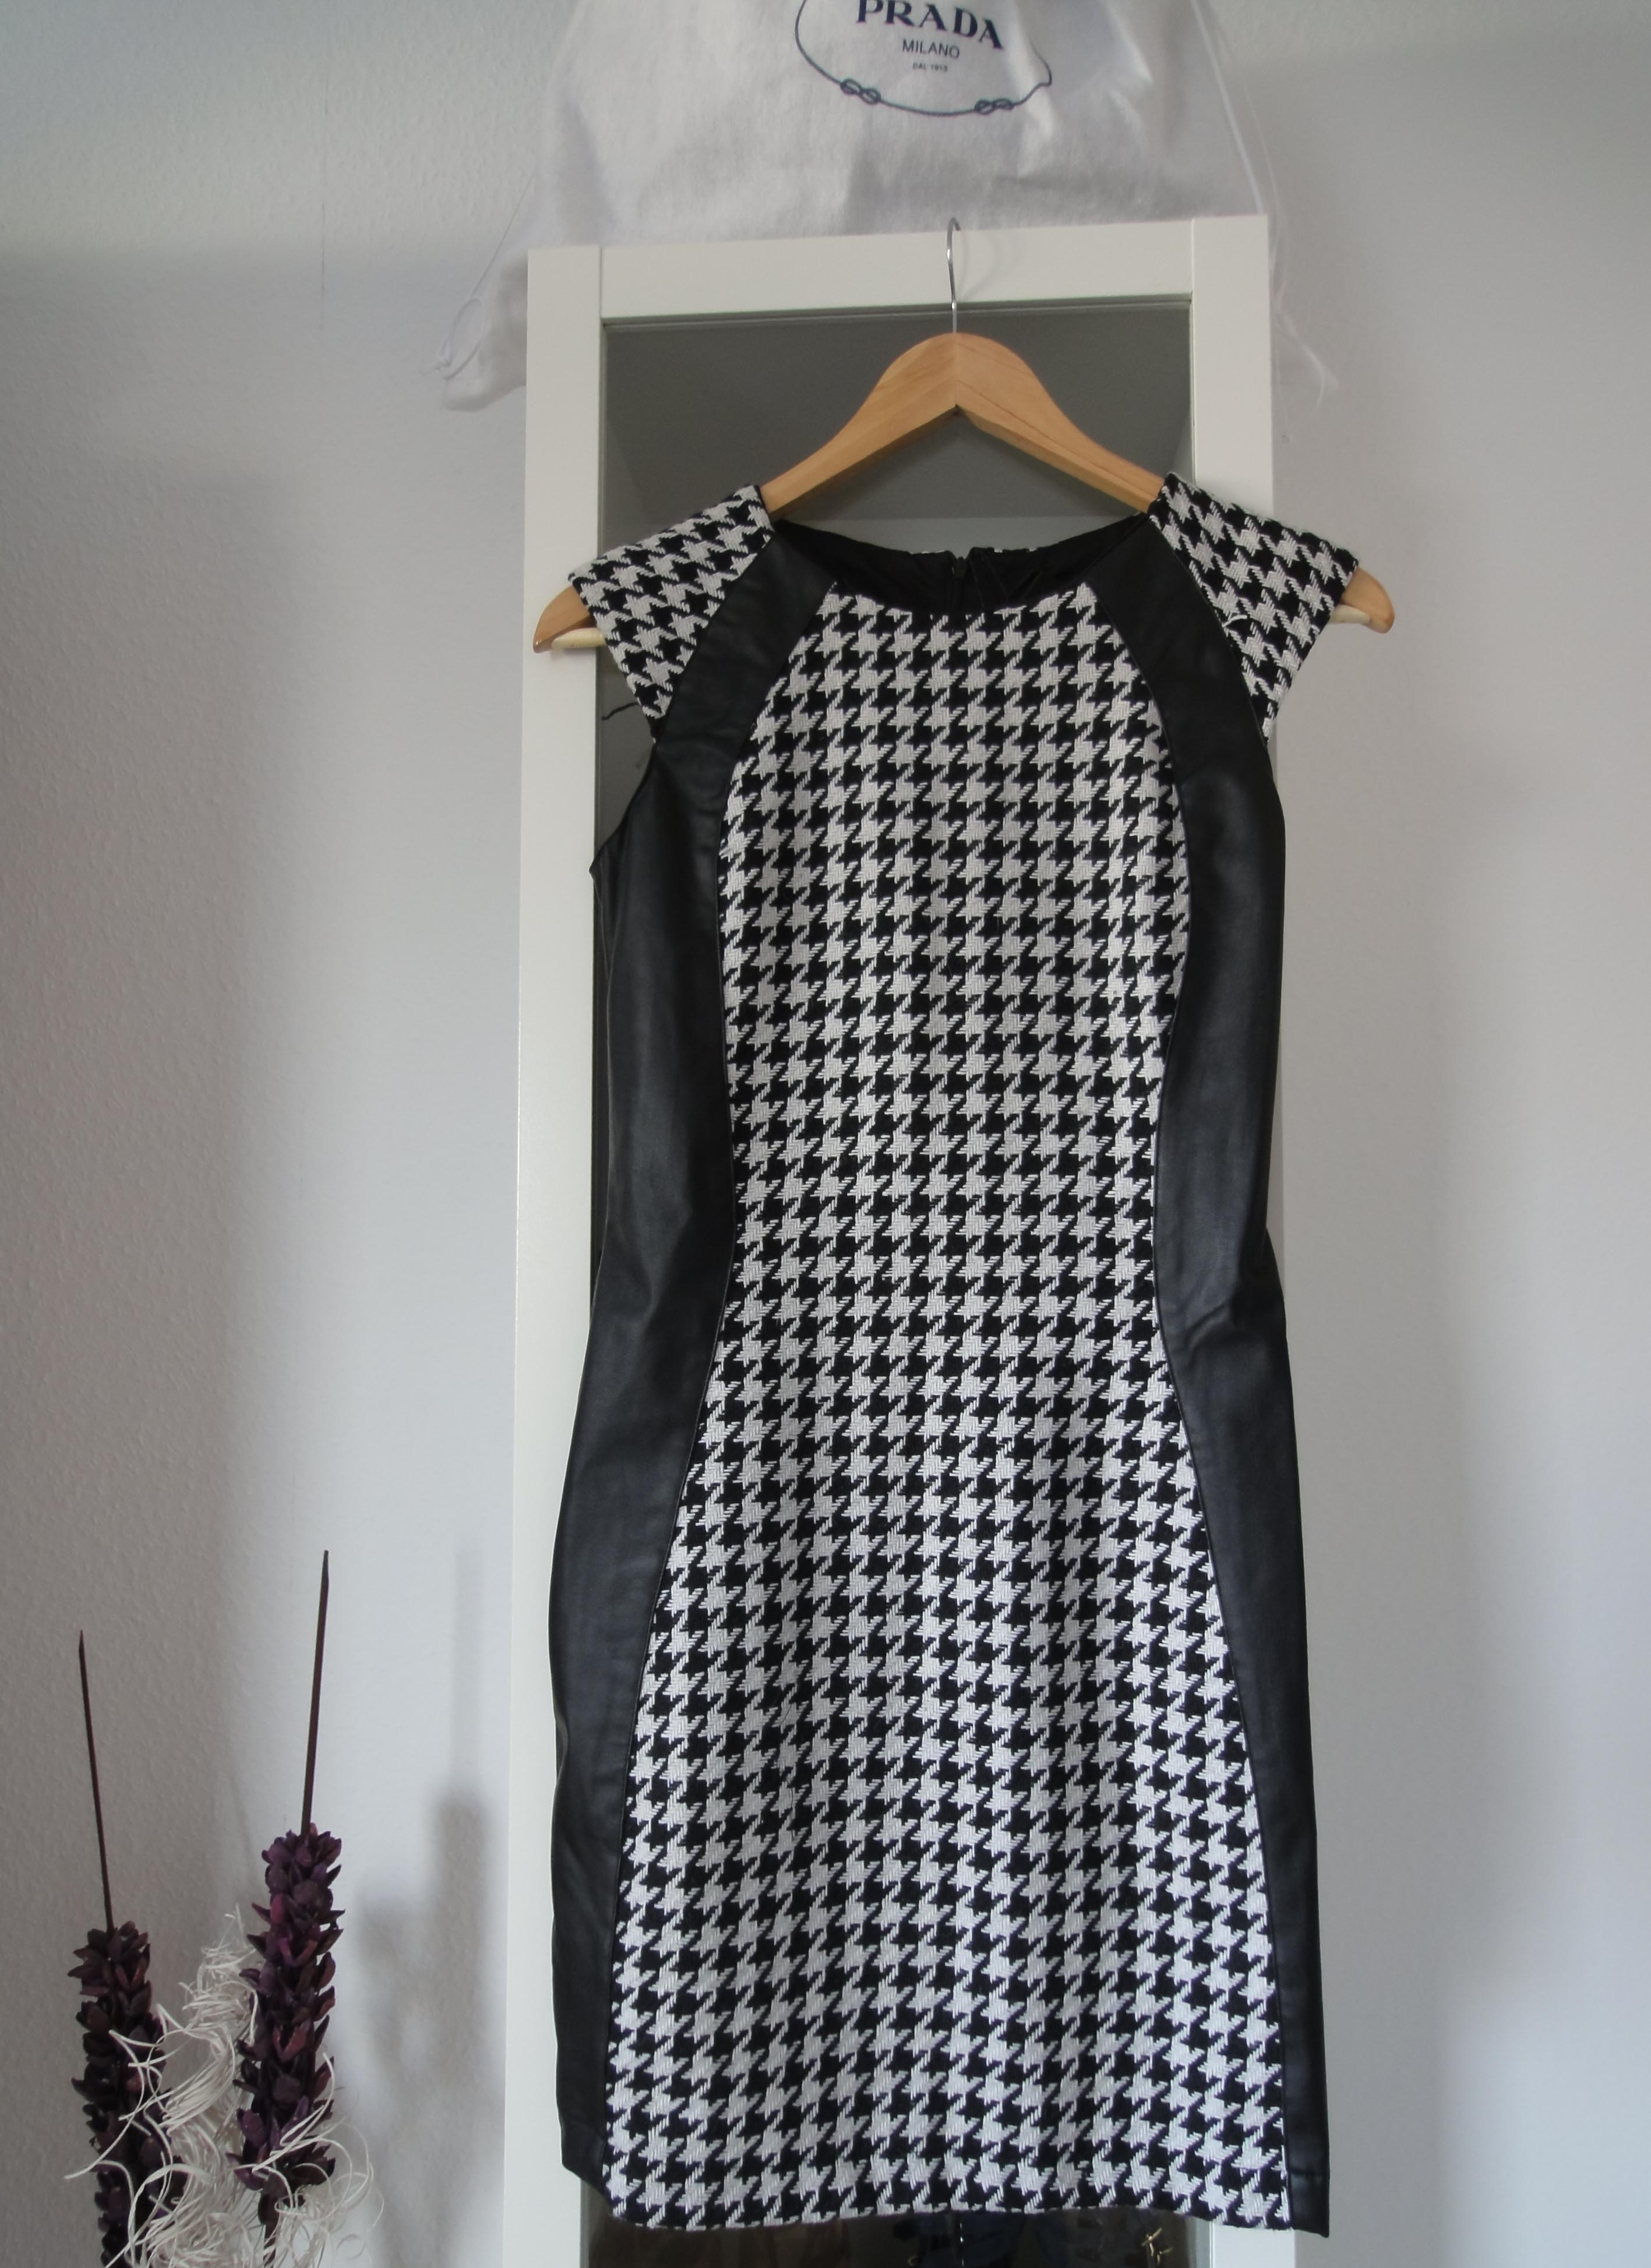 Kleid Karo Muster Shopping Haul Primark New Yorker Shopping Ausbeute Köln Modeblog New in